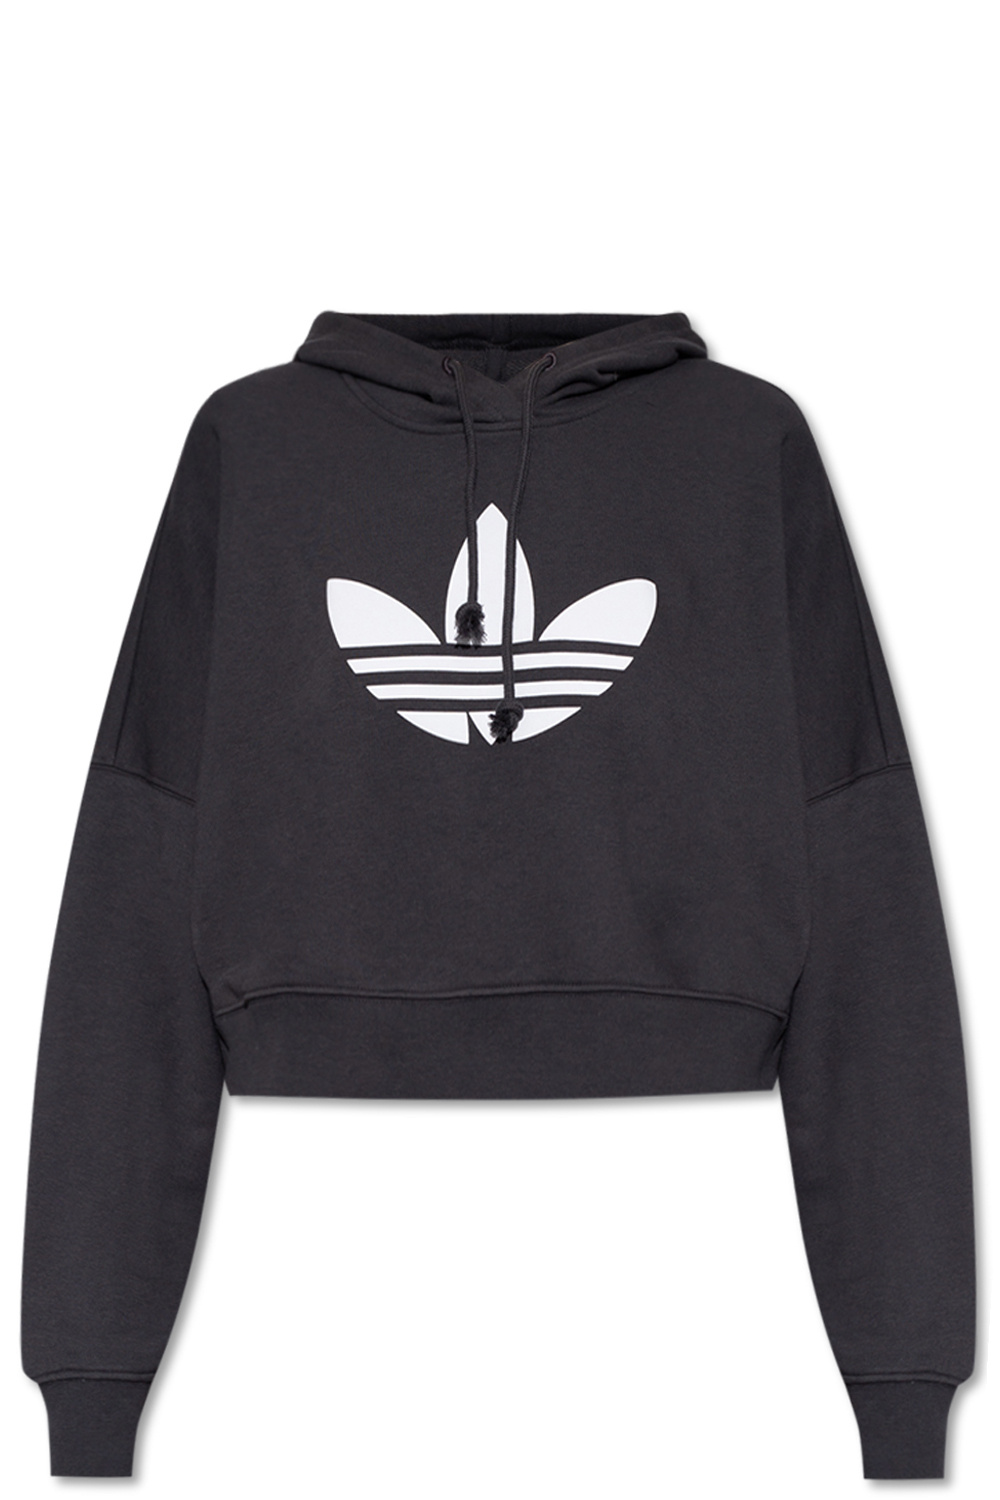 ADIDAS Originals Cropped oversize hoodie | Women's Clothing | SPLV Adidas  Tiro 3S Jsy Ess | StclaircomoShops